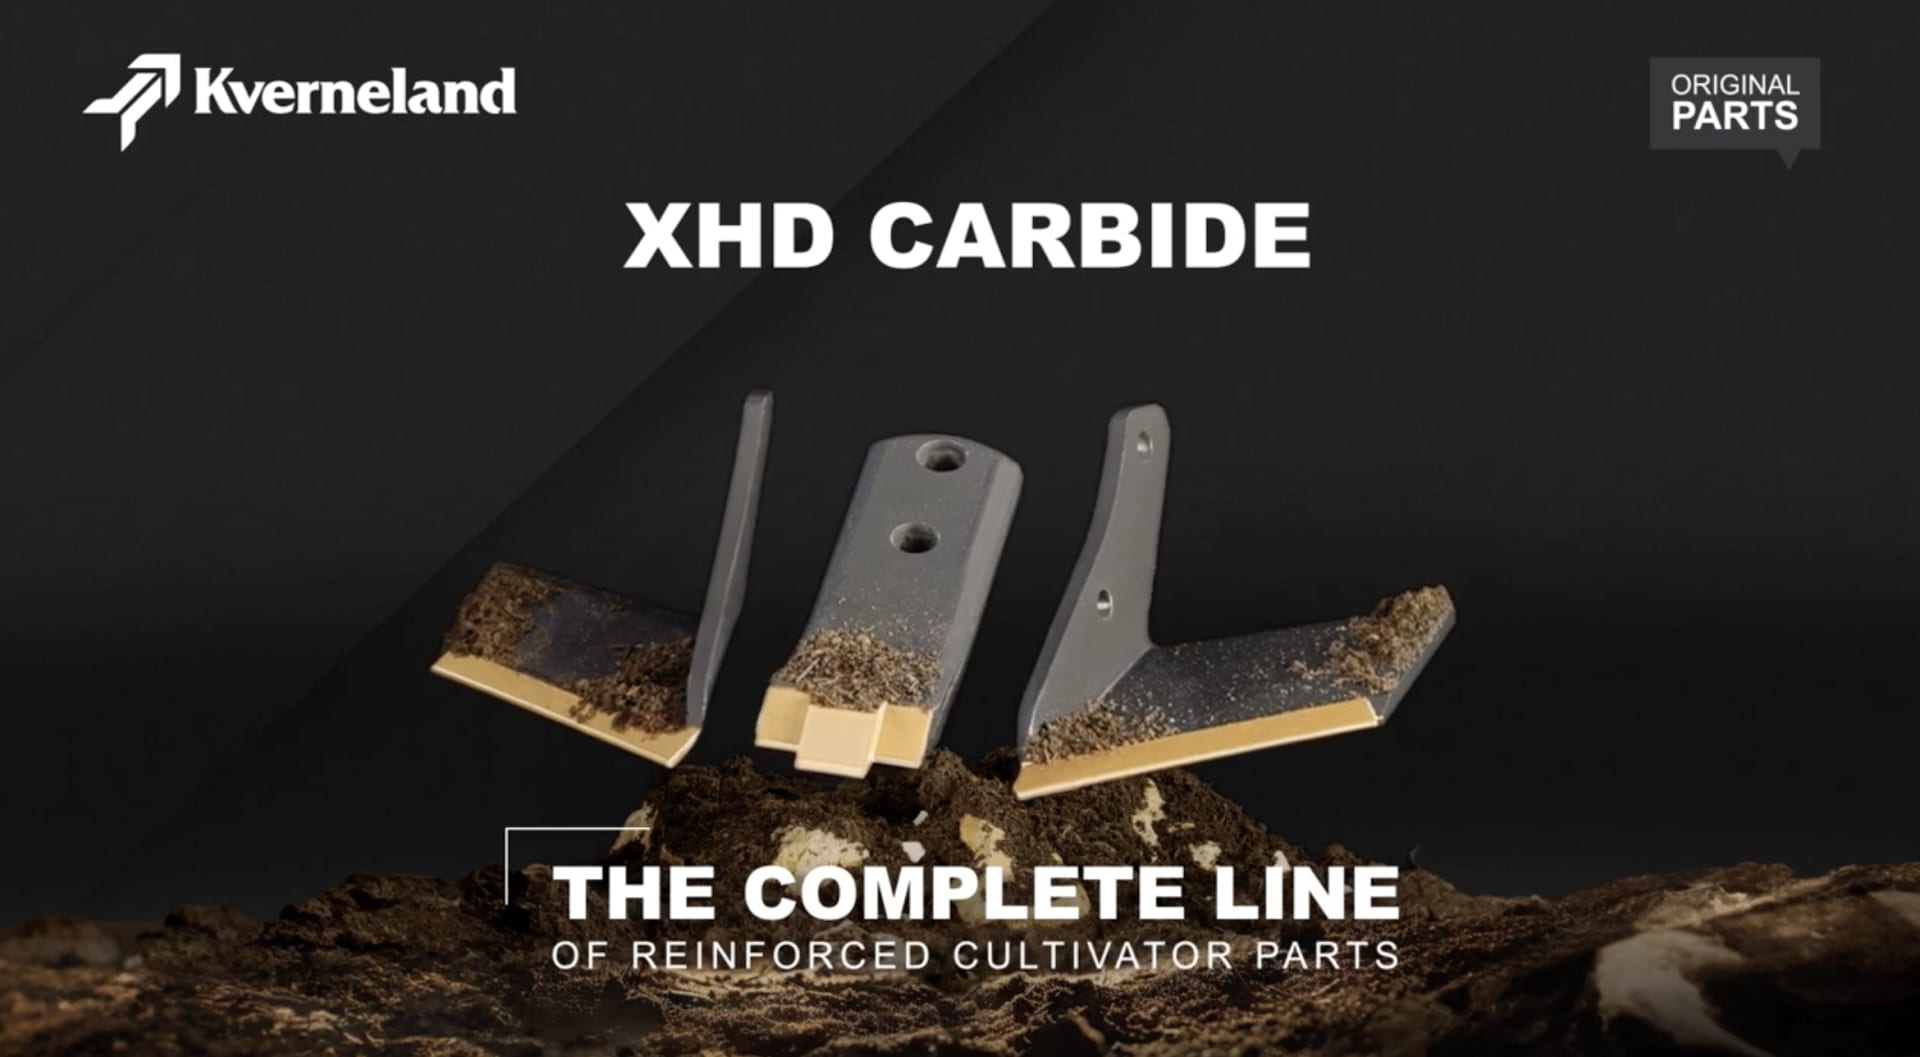 XHD range